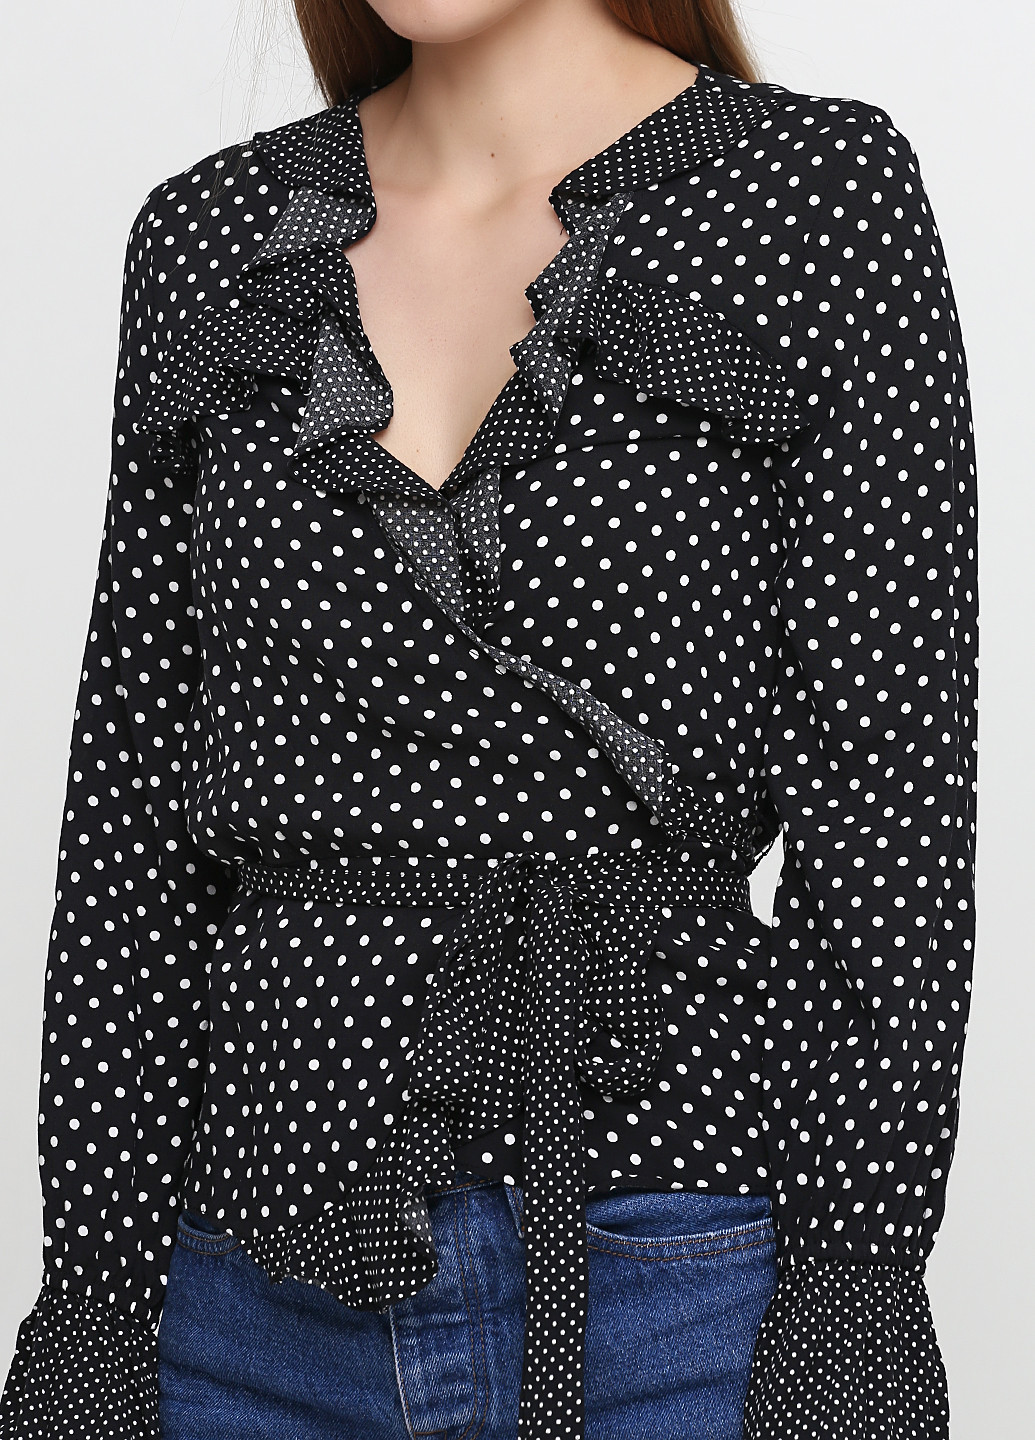 Черно-белая демисезонная блуза на запах H&M